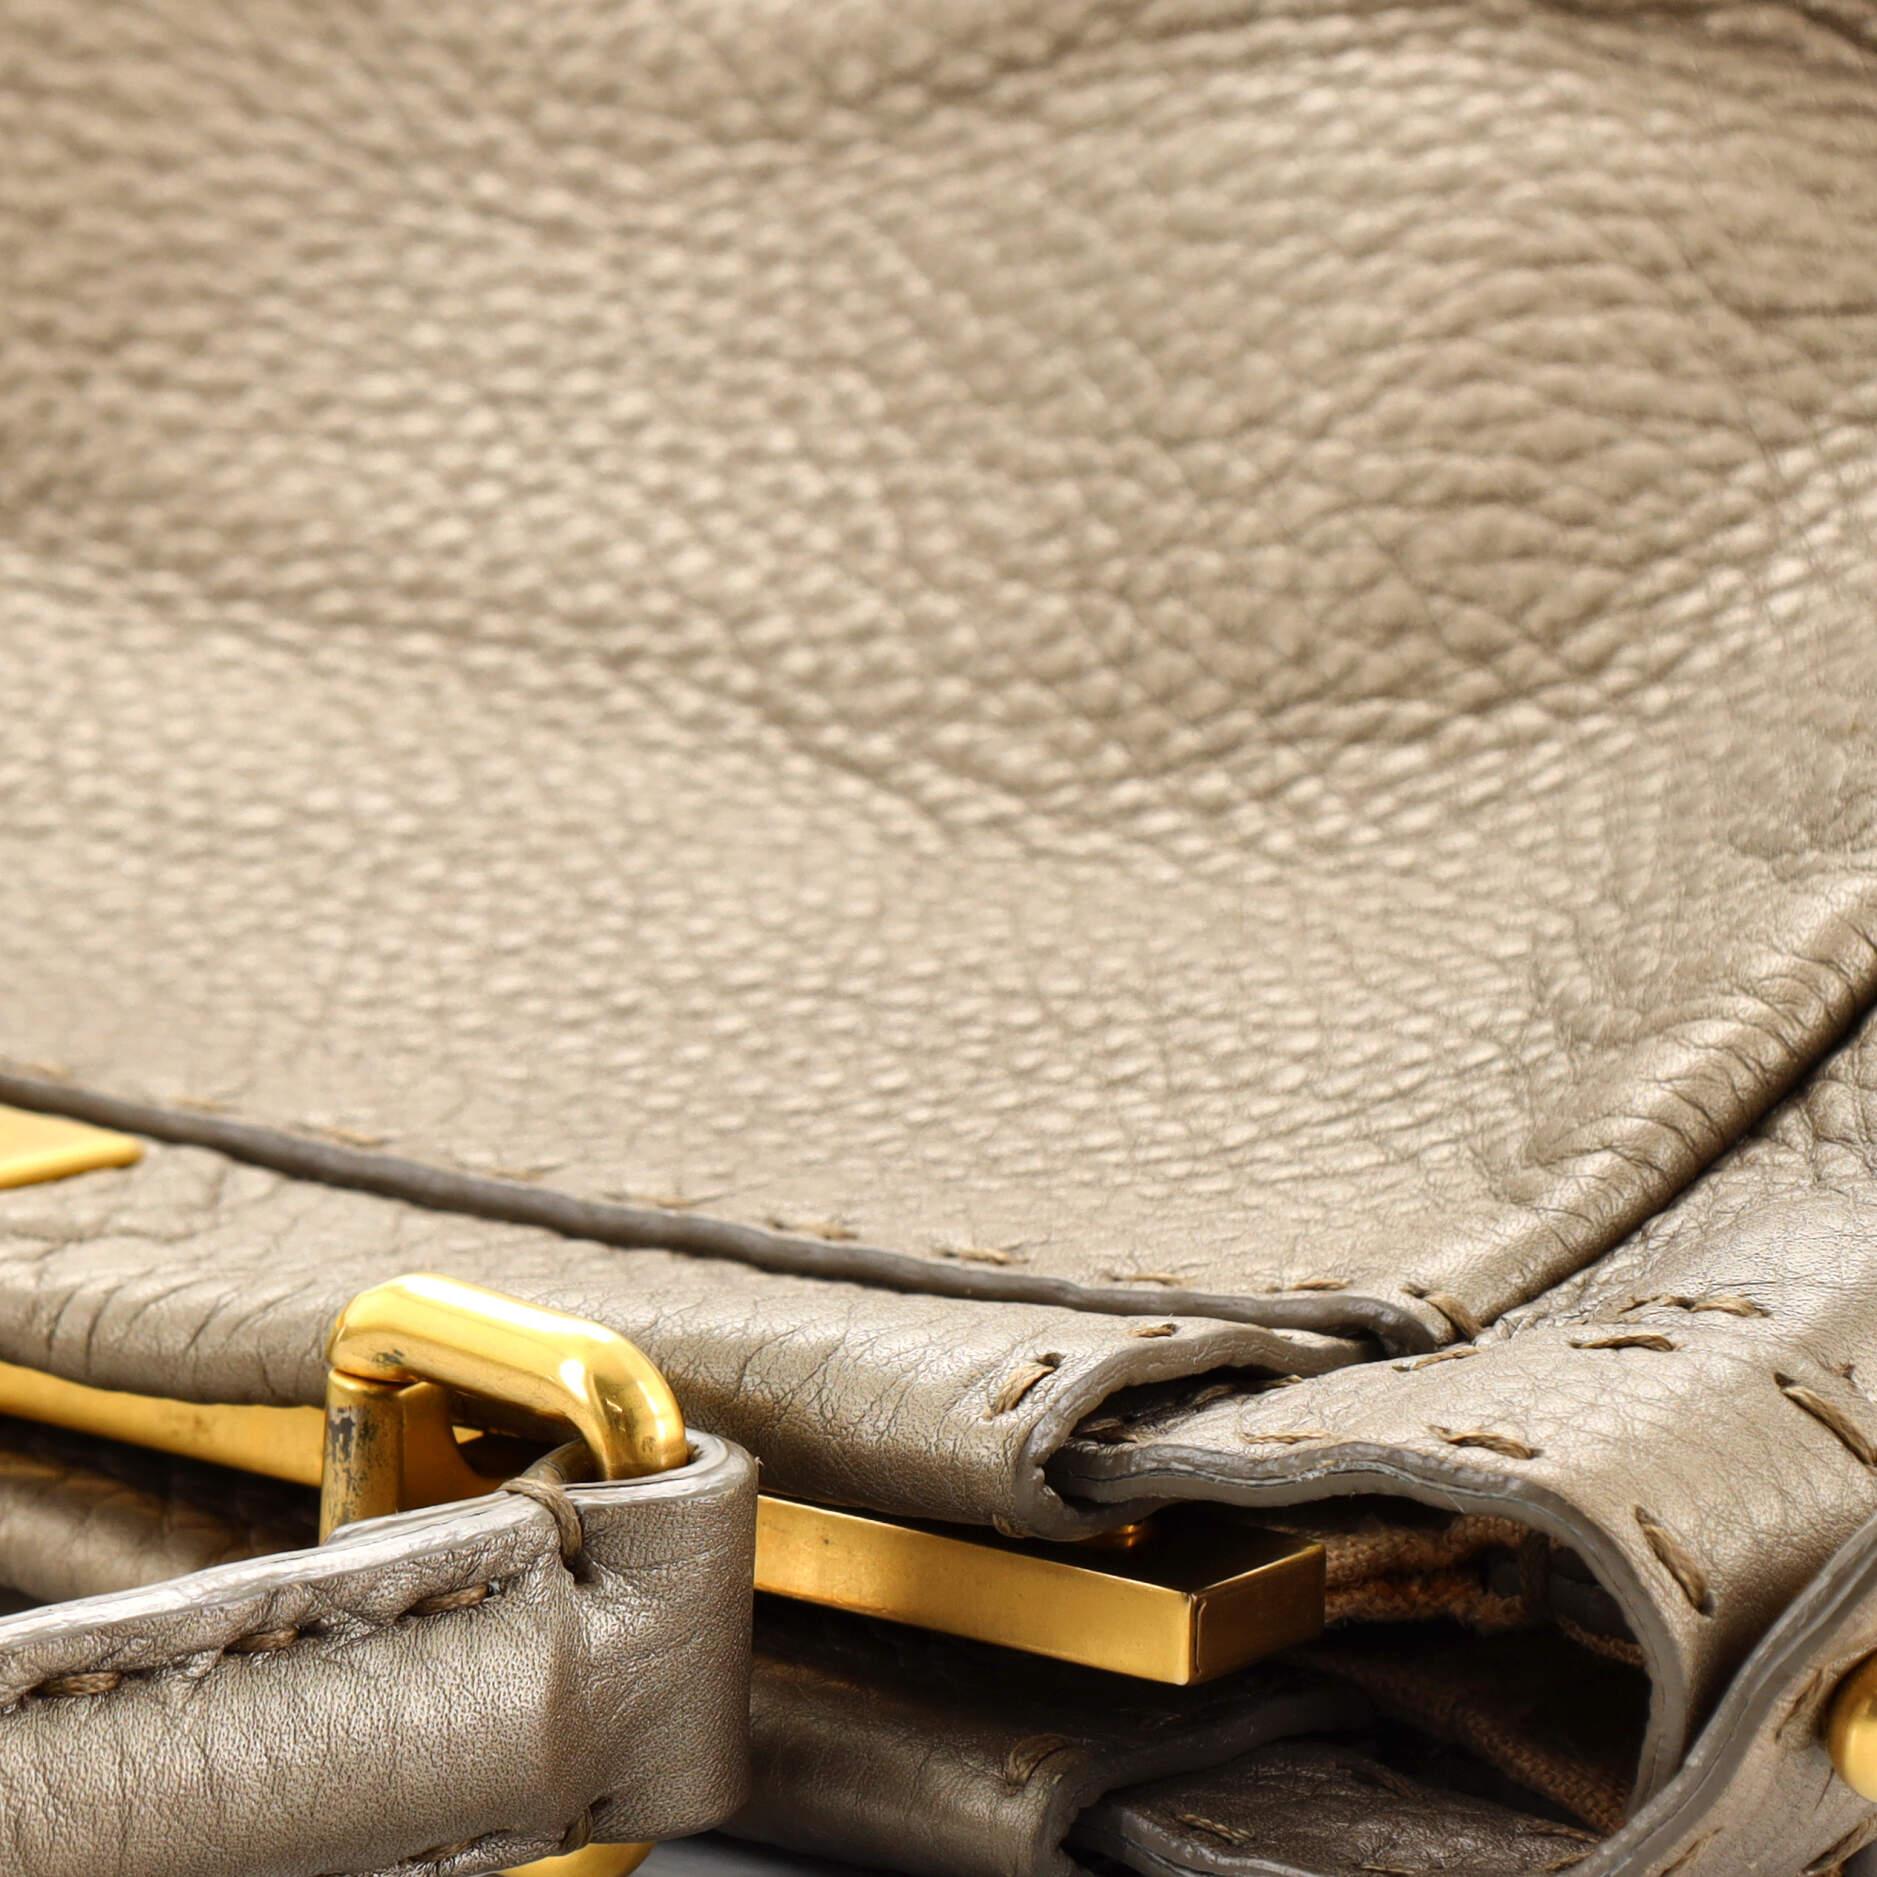 Women's or Men's Fendi Selleria Peekaboo Bag Soft Leather Regular